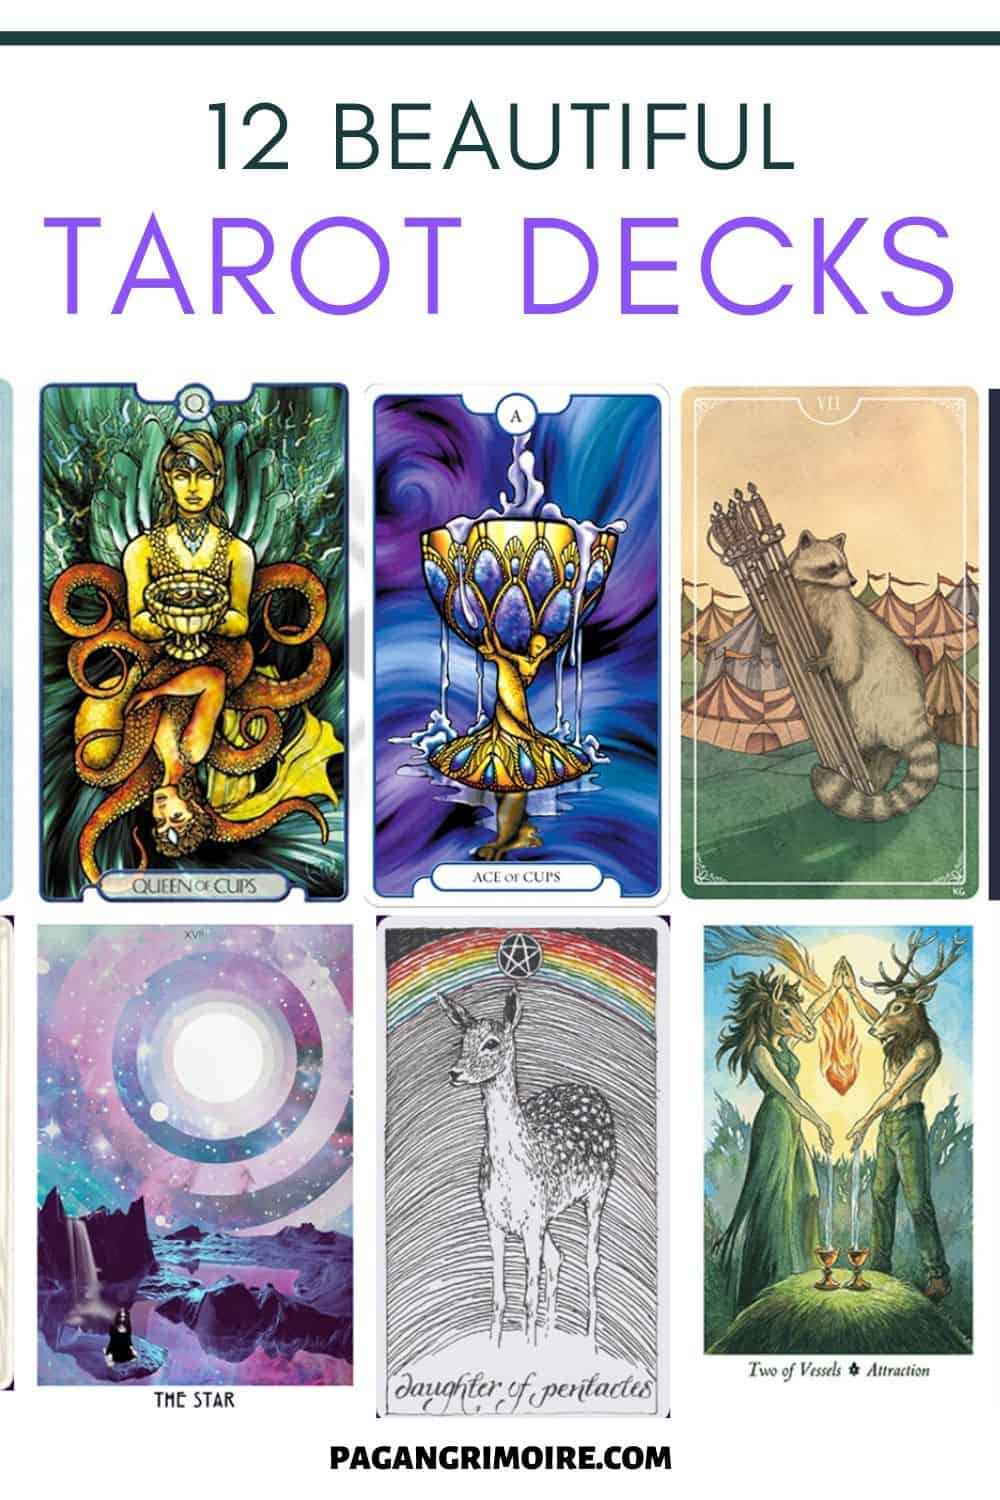 12 Beautiful Tarot Decks for Divination The Pagan Grimoire